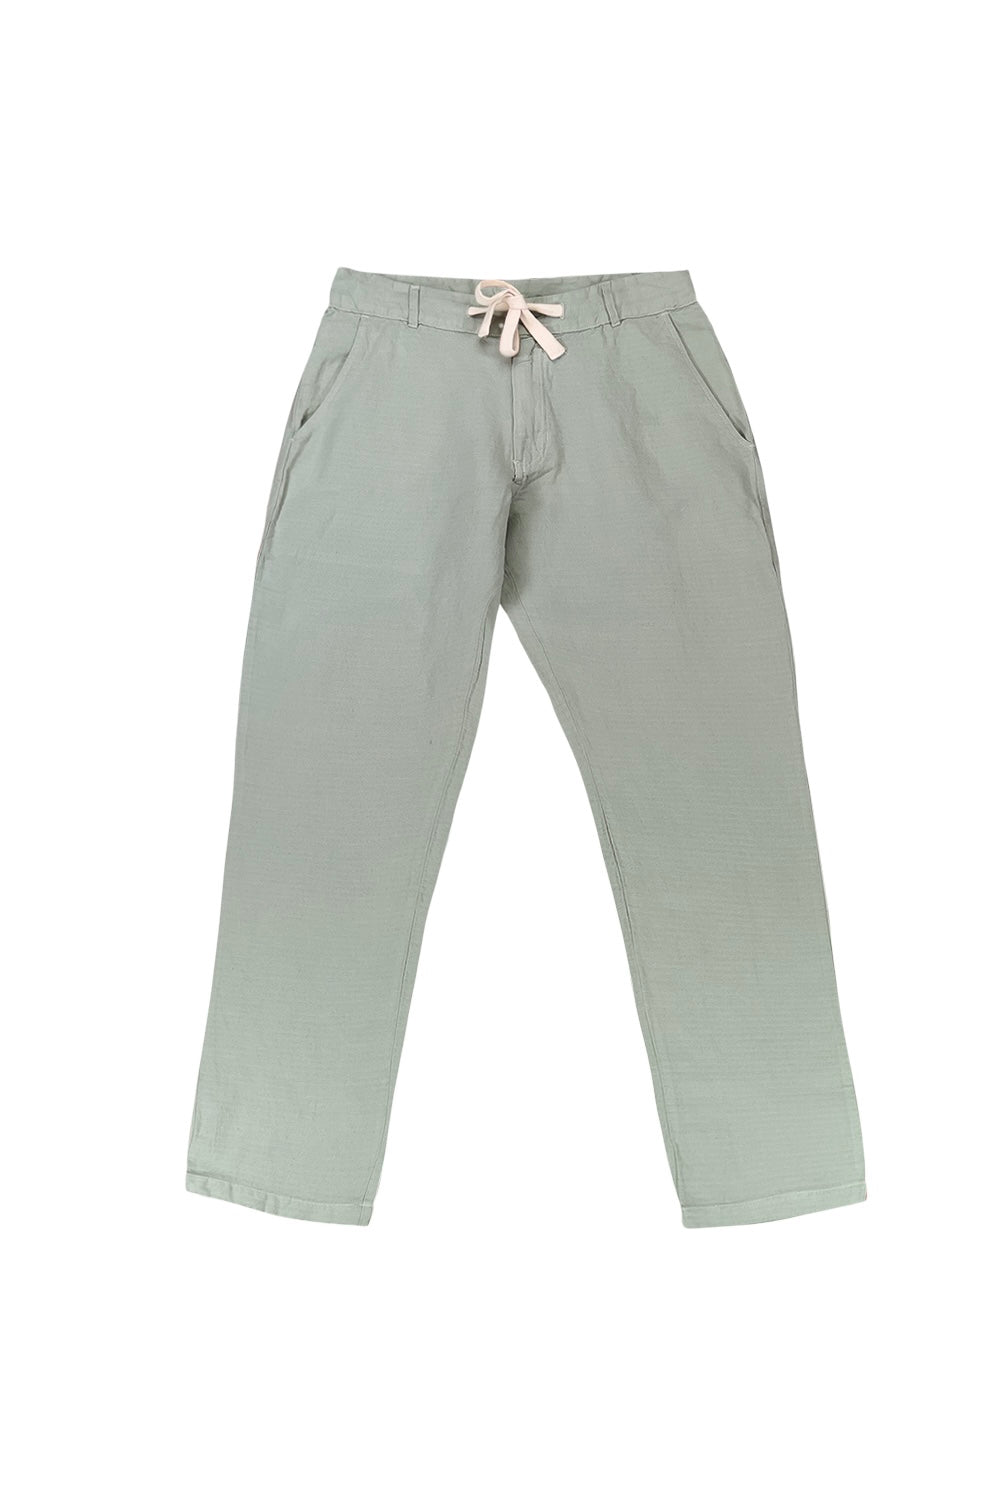 Traverse Pant | Jungmaven Hemp Clothing & Accessories / Color: Seafoam Green